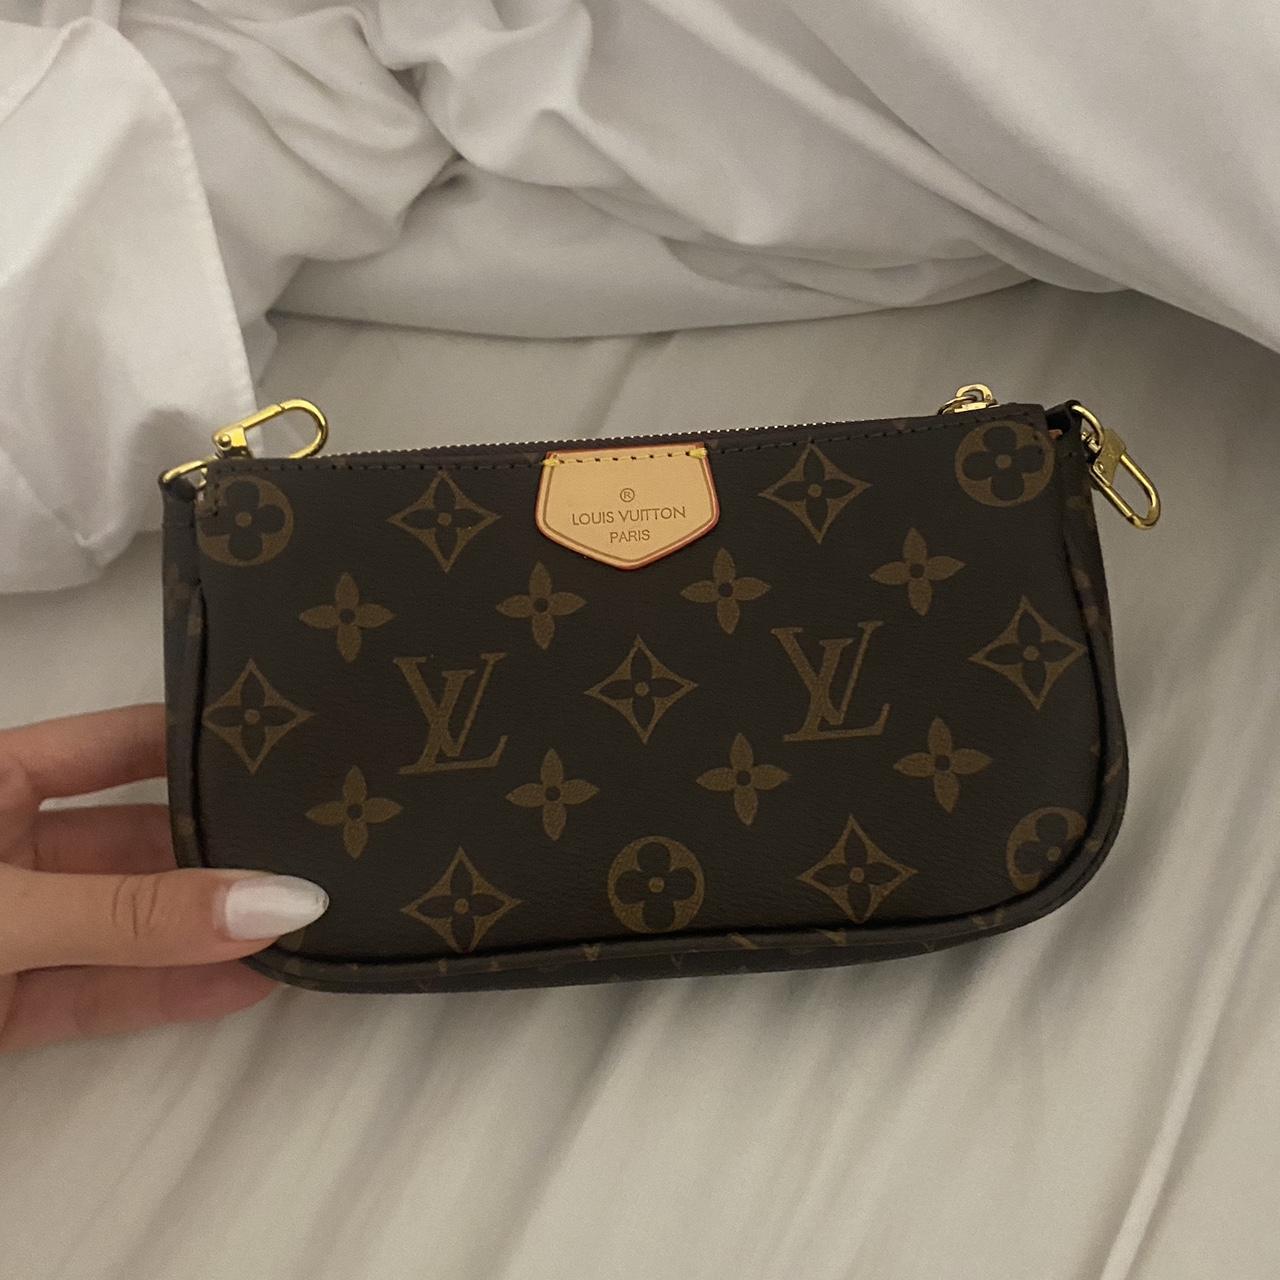 How to spot a fake Louis Vuitton wallet #designer